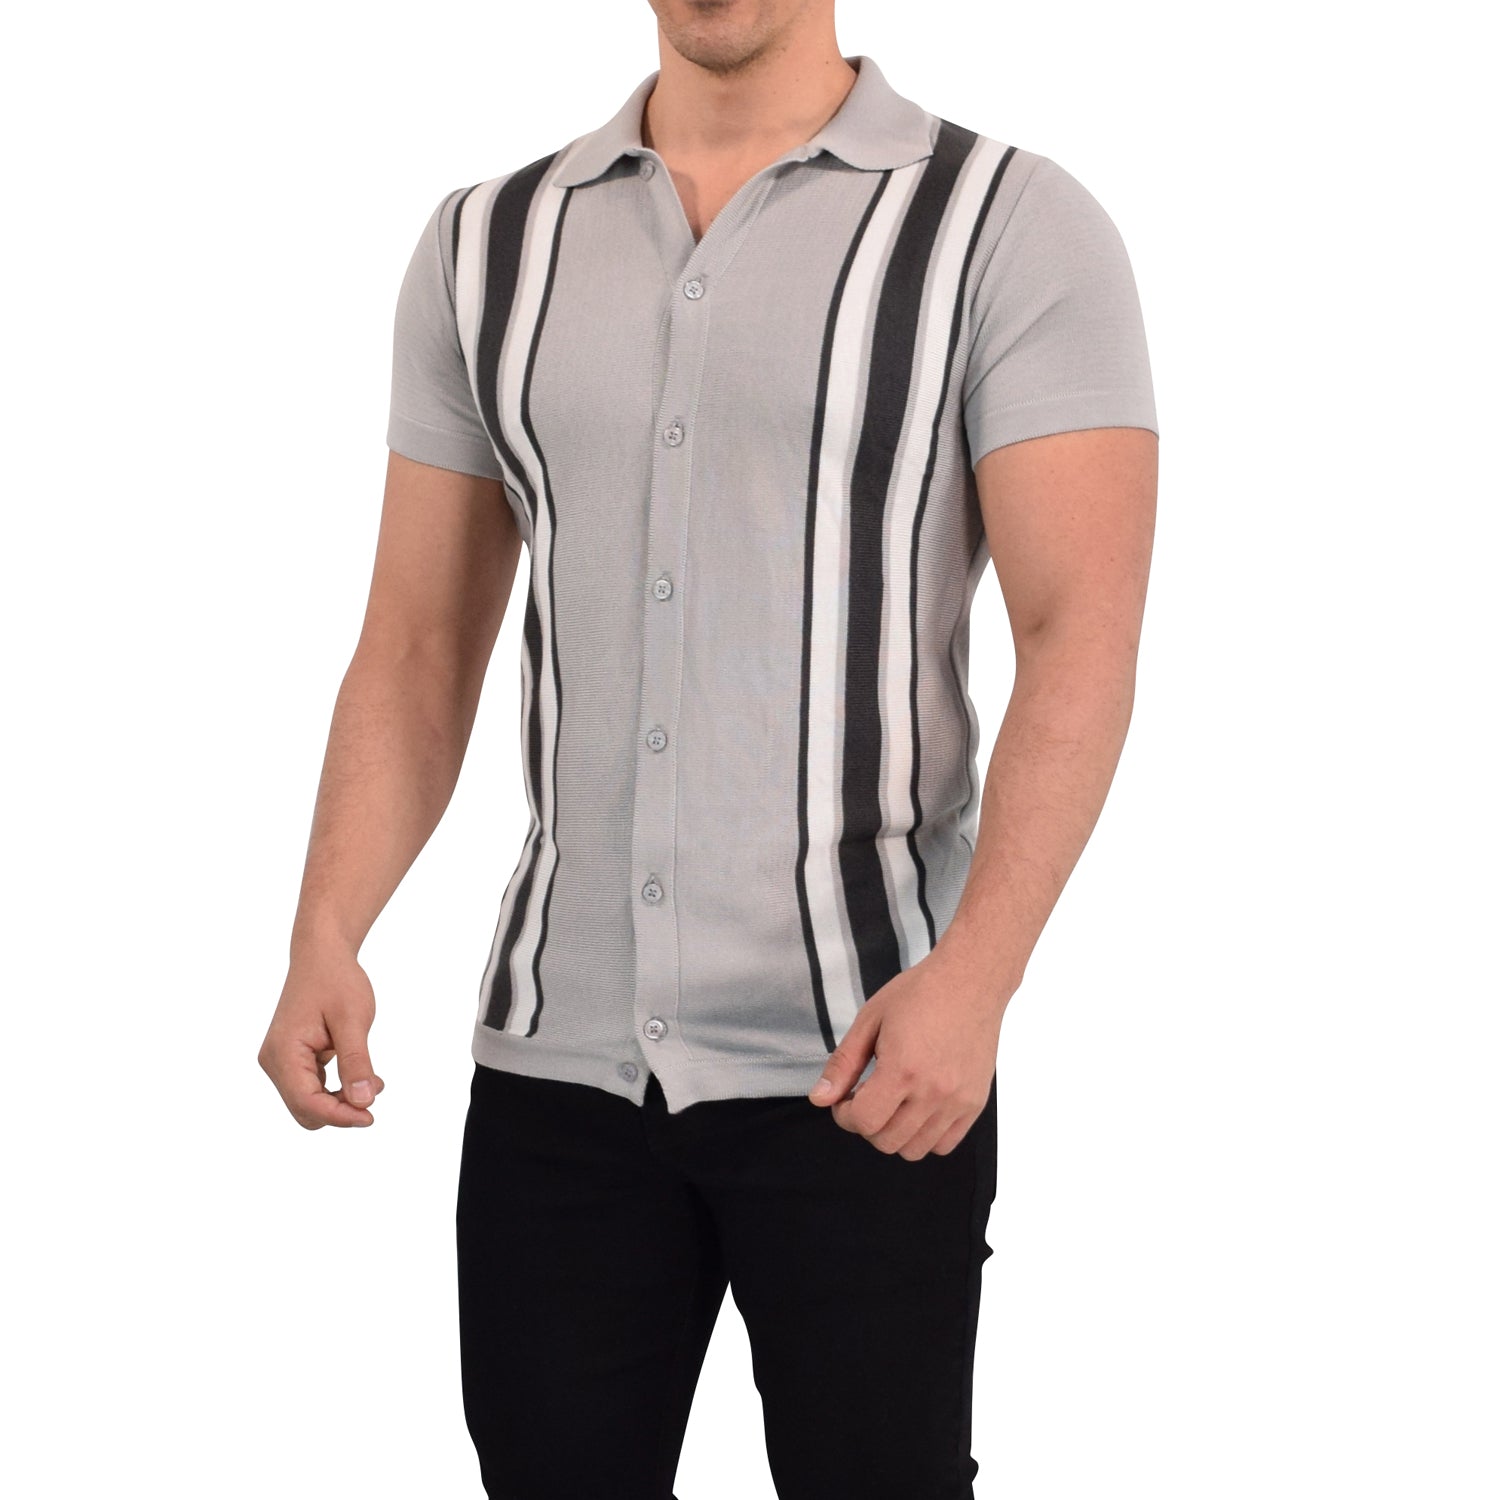 Retro Knitted Shirt Gray Black Stripe